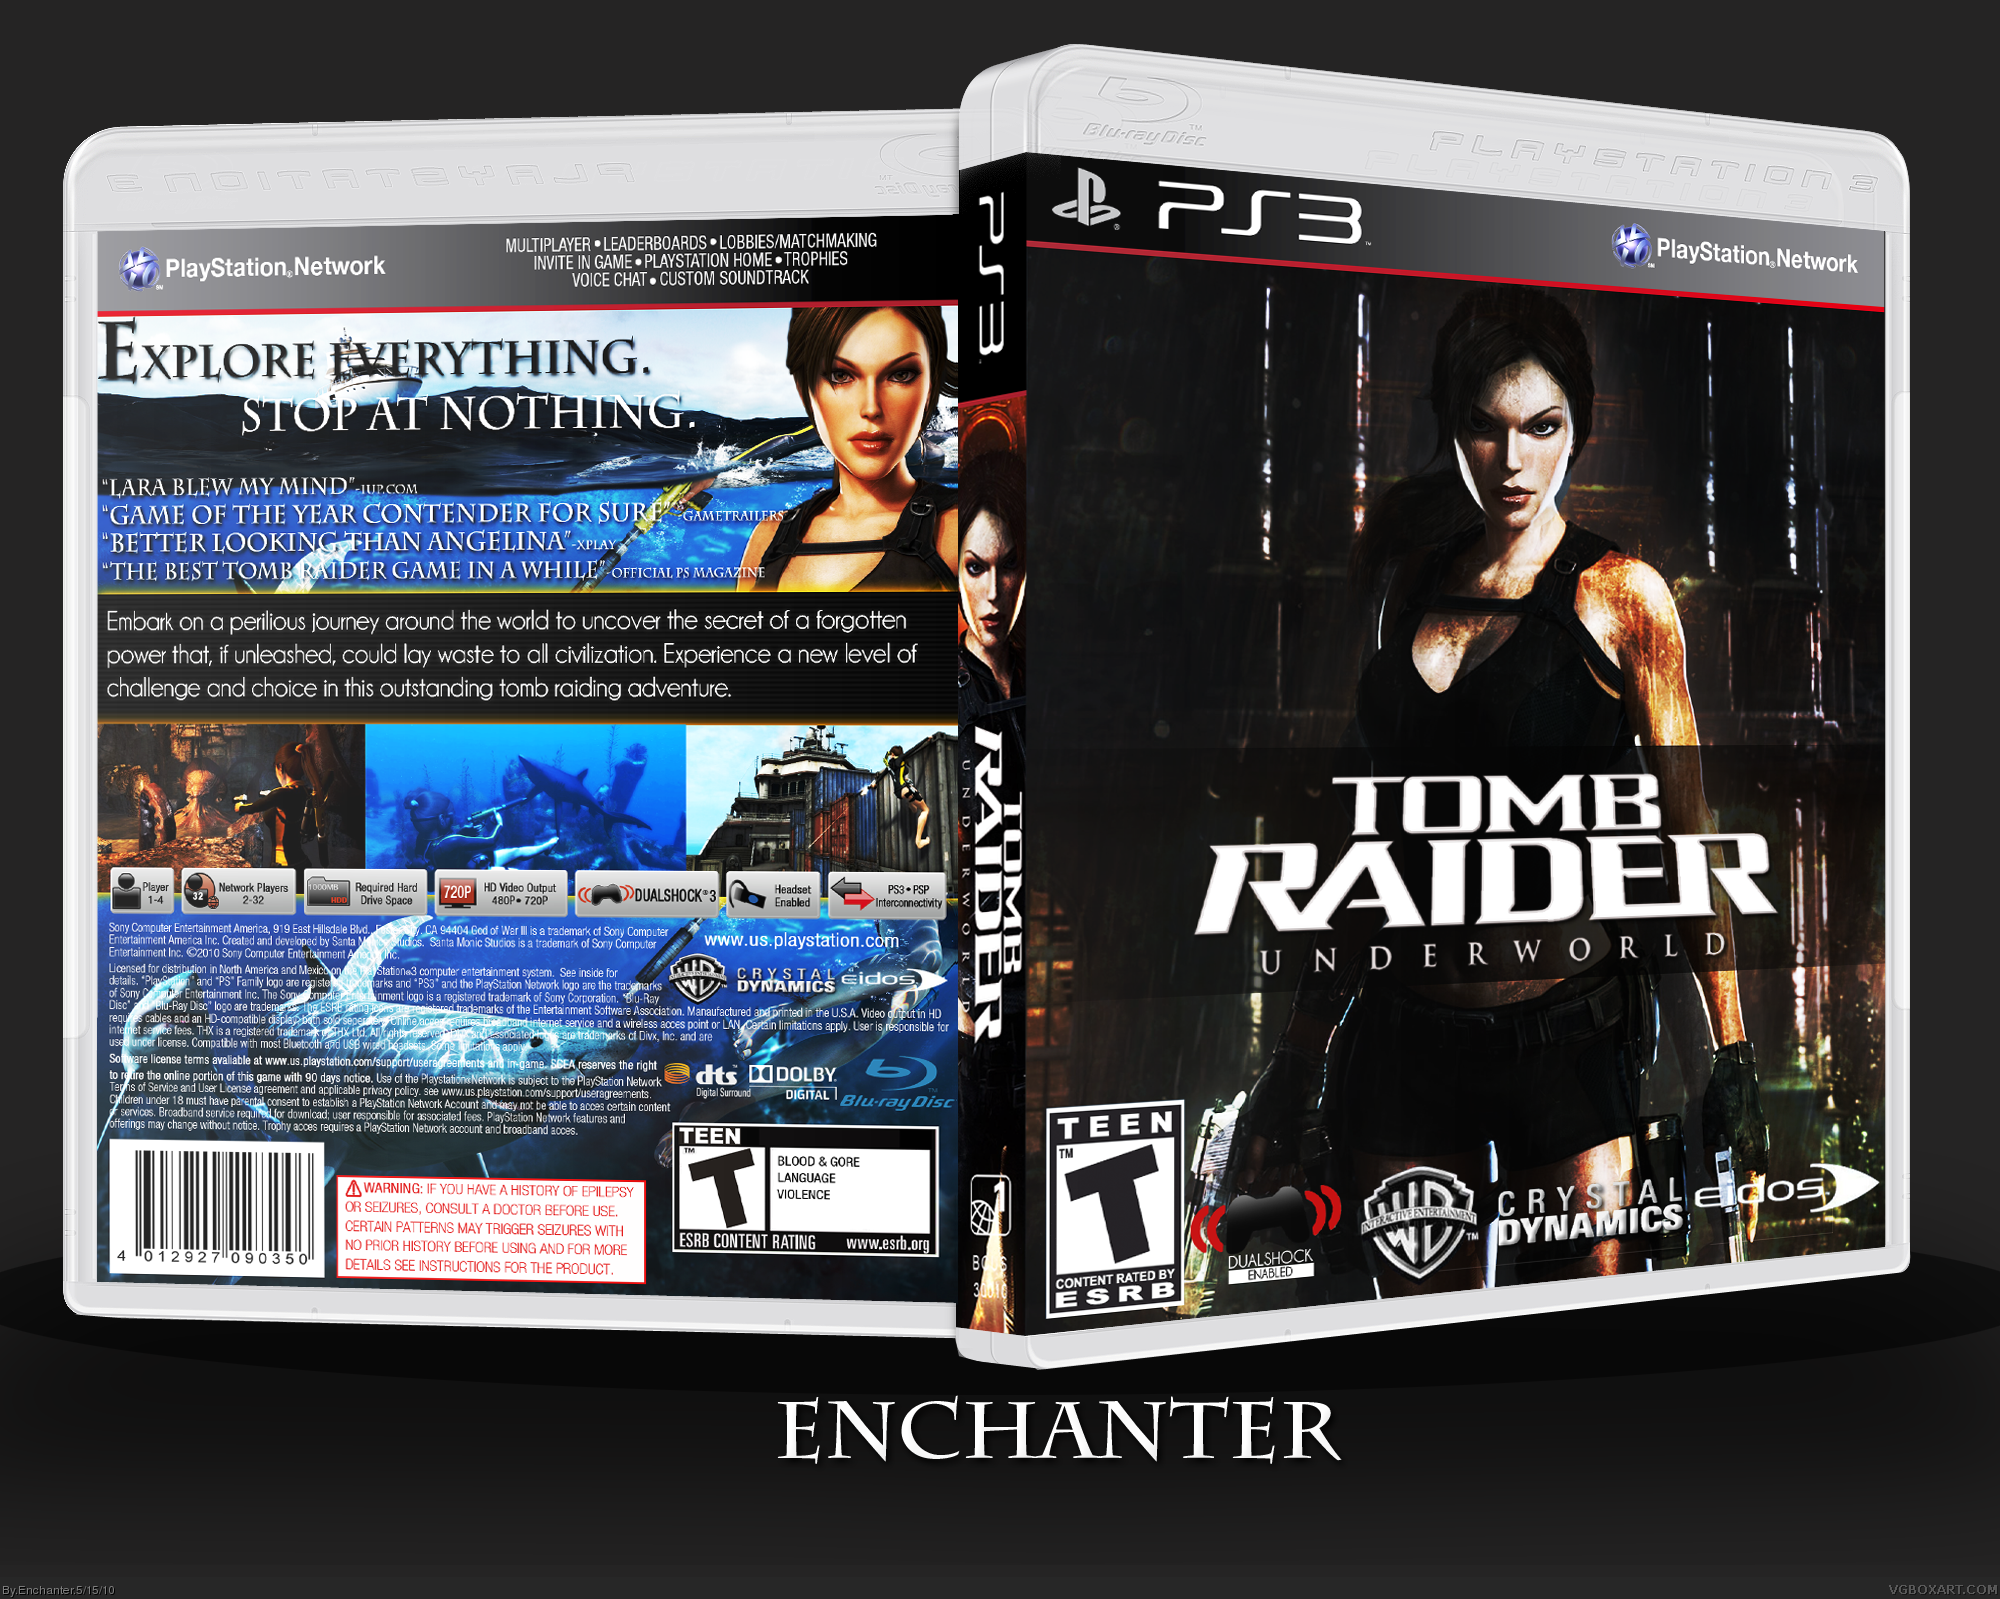 Tomb Raider: Underworld box cover